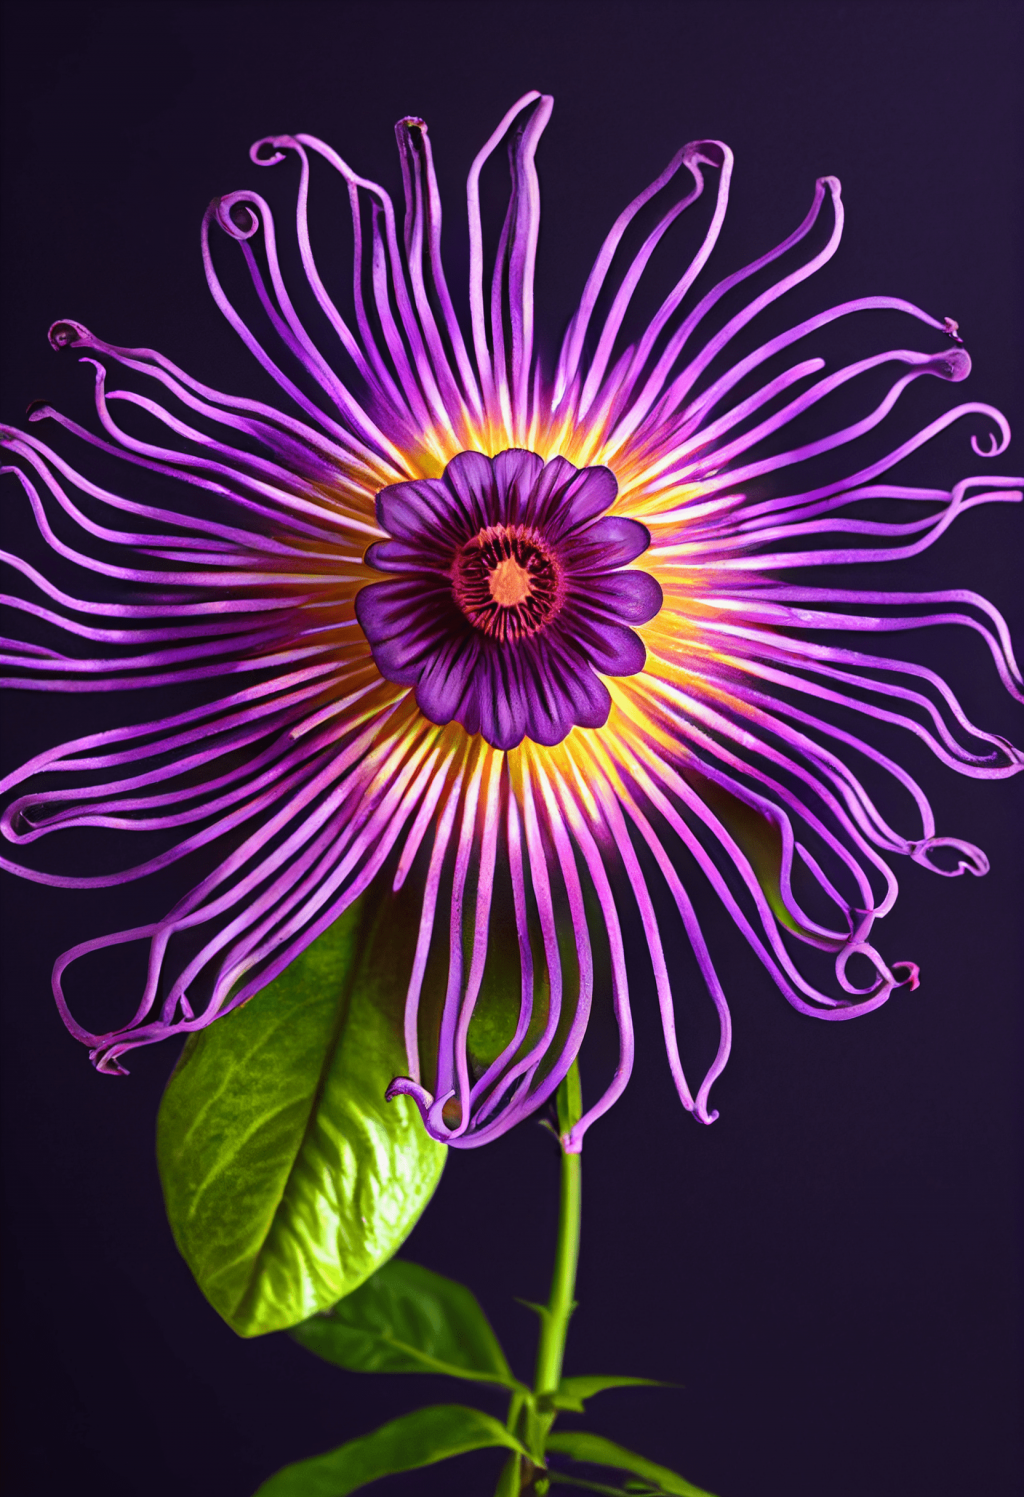 Symmetrical flower